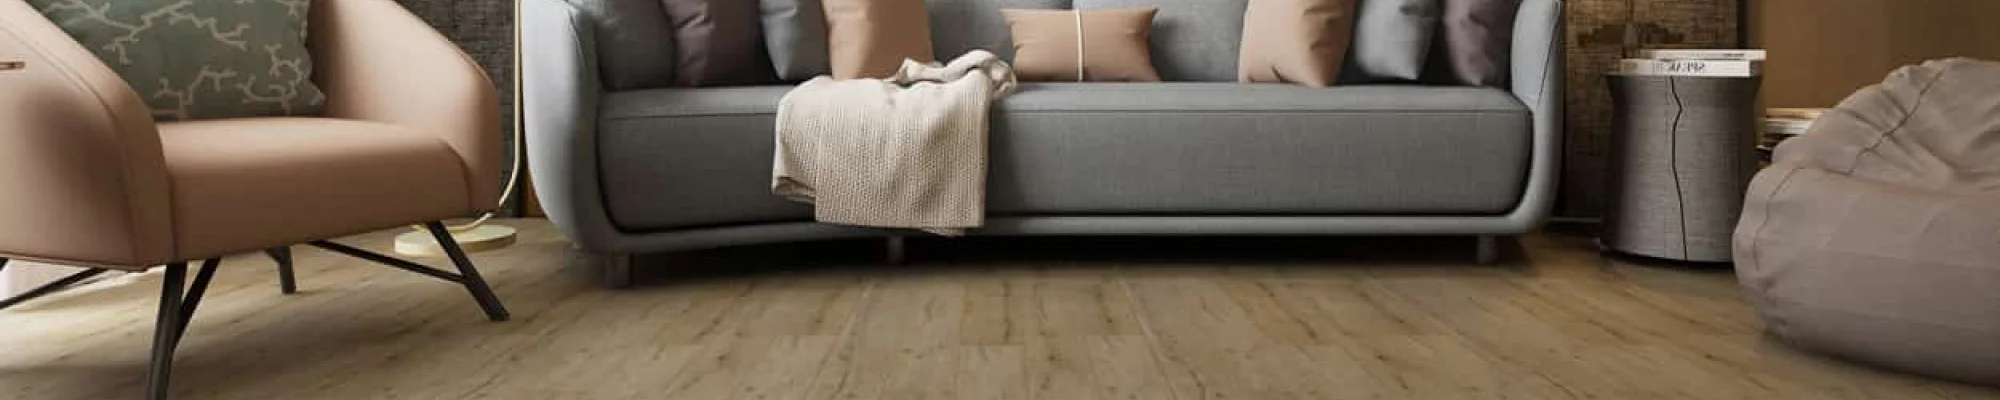 Homecrest flooring products